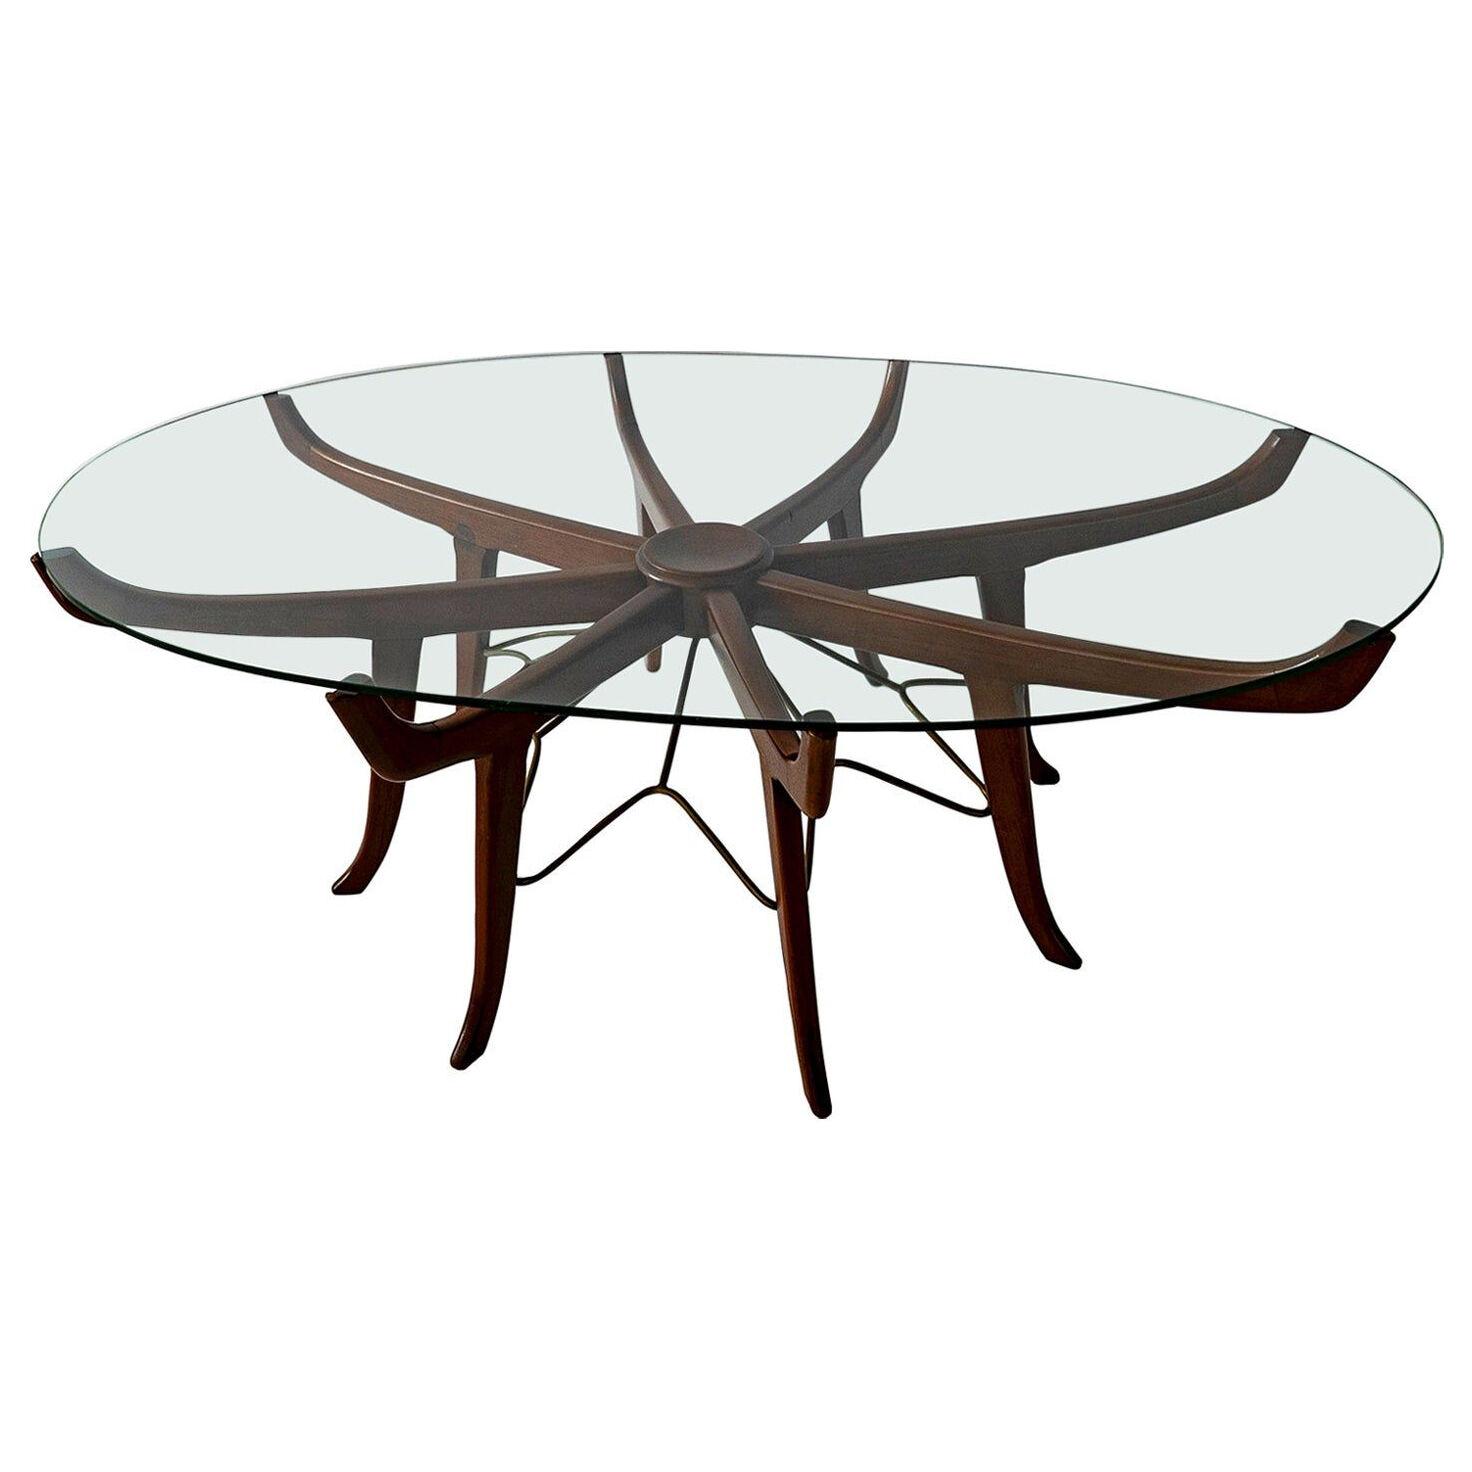 Italian Modern Mahogany, Steel and Glass Coffee Table, Attrib. to Carlo de Carli